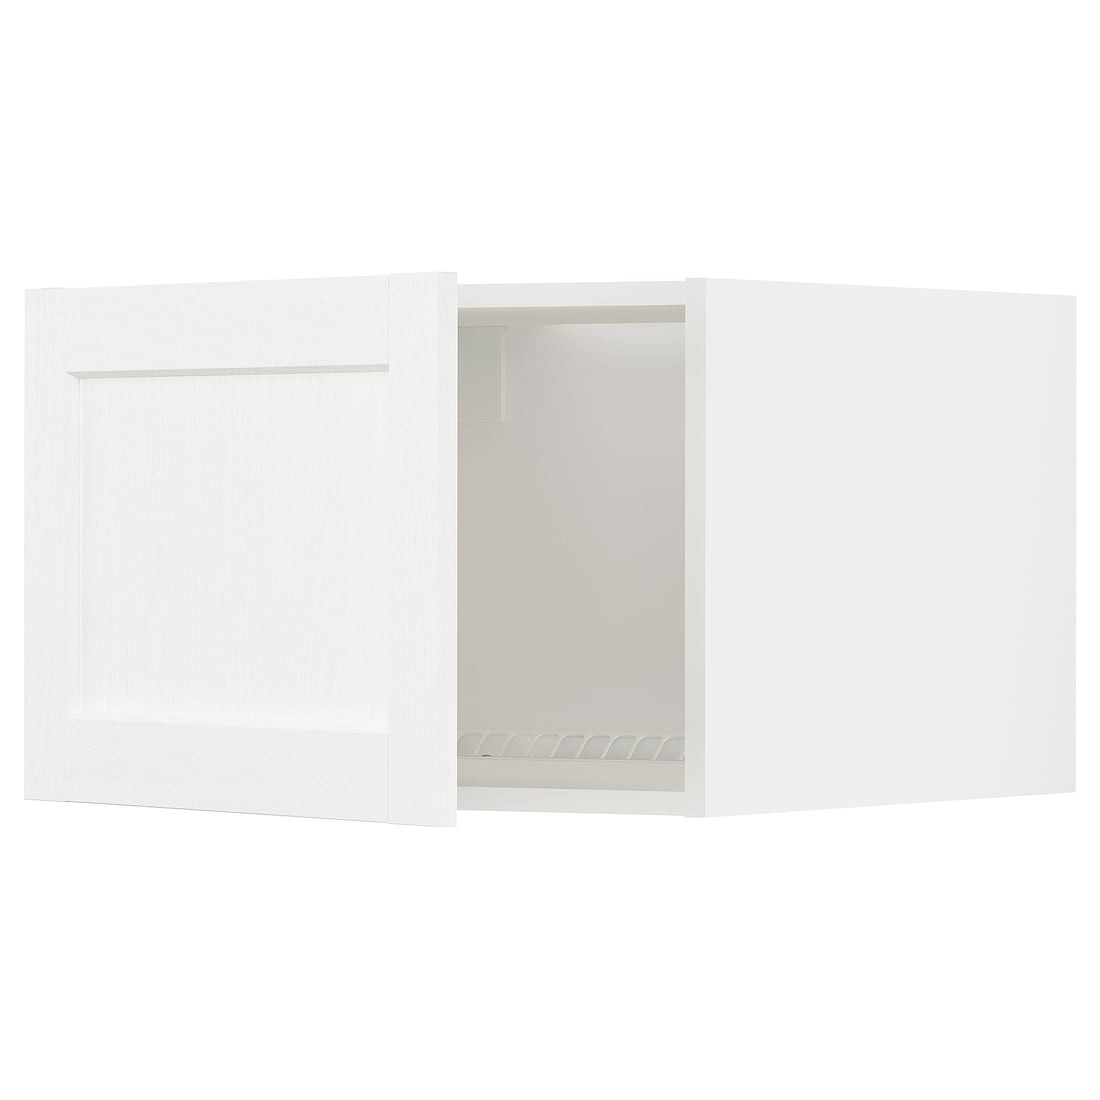 METOD МЕТОД Верхний шкаф для холодильника / морозильника, белый Enköping / белый имитация дерева, 60x40 см